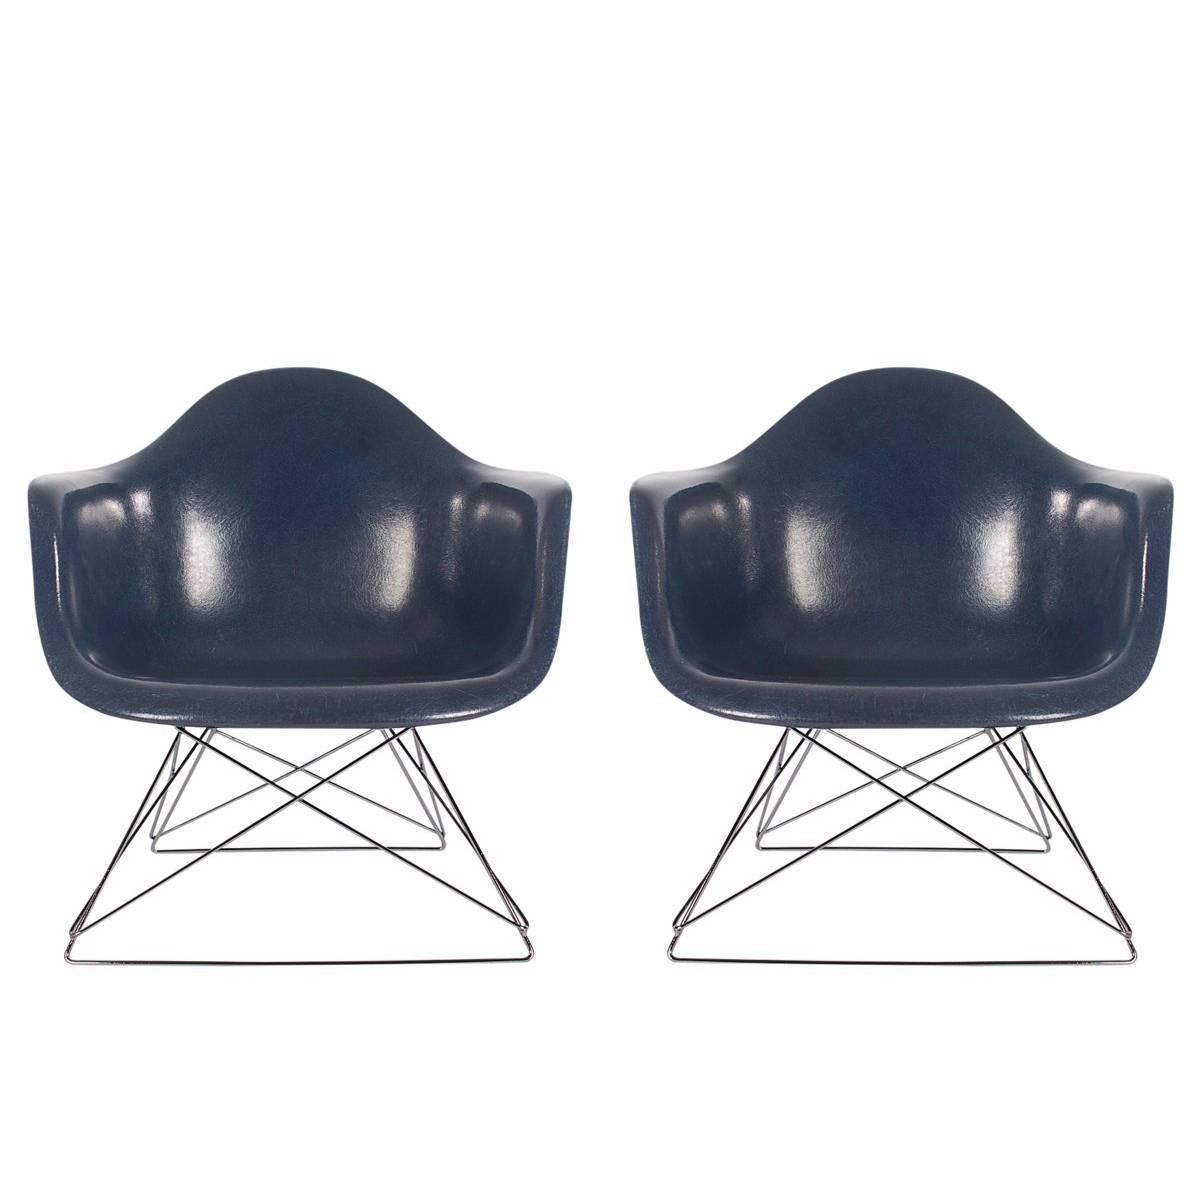 Mid-Century Modern Charles Eames Herman Miller Fiberglass Lounge Chairs in Navy